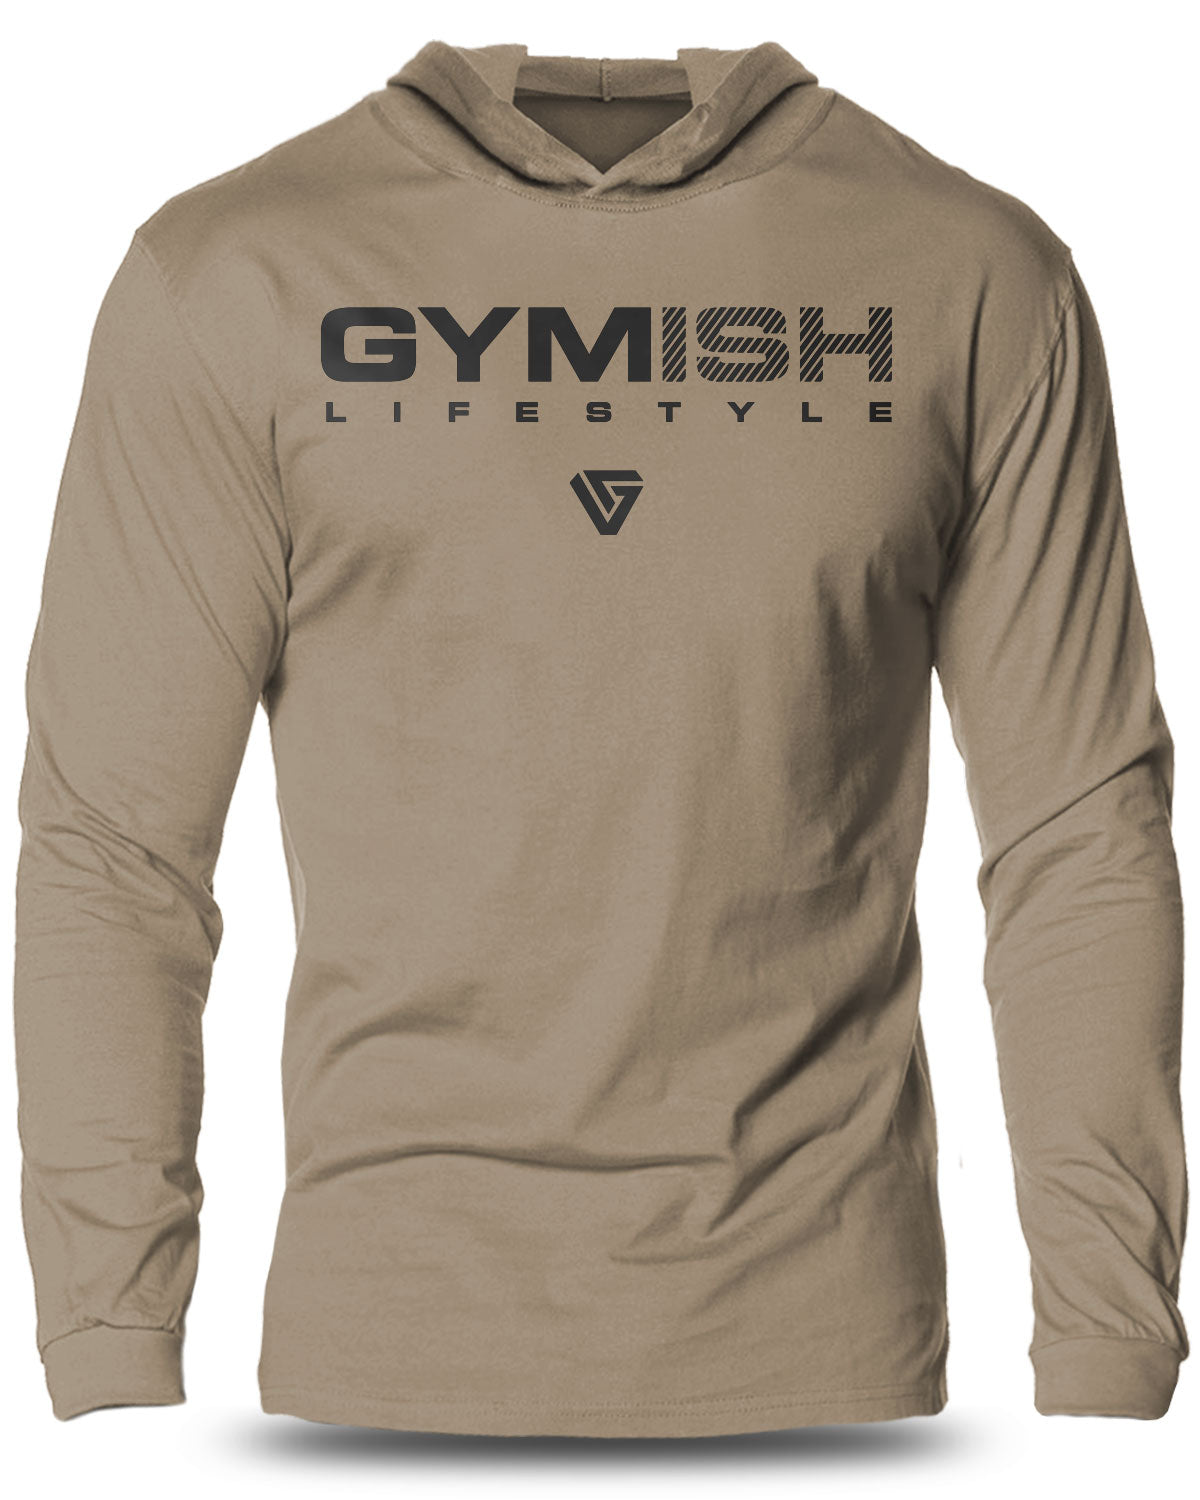 047- Gymish Lifestyle v2 New Large Lightweight Long Sleeve Hooded T-shirt for Men